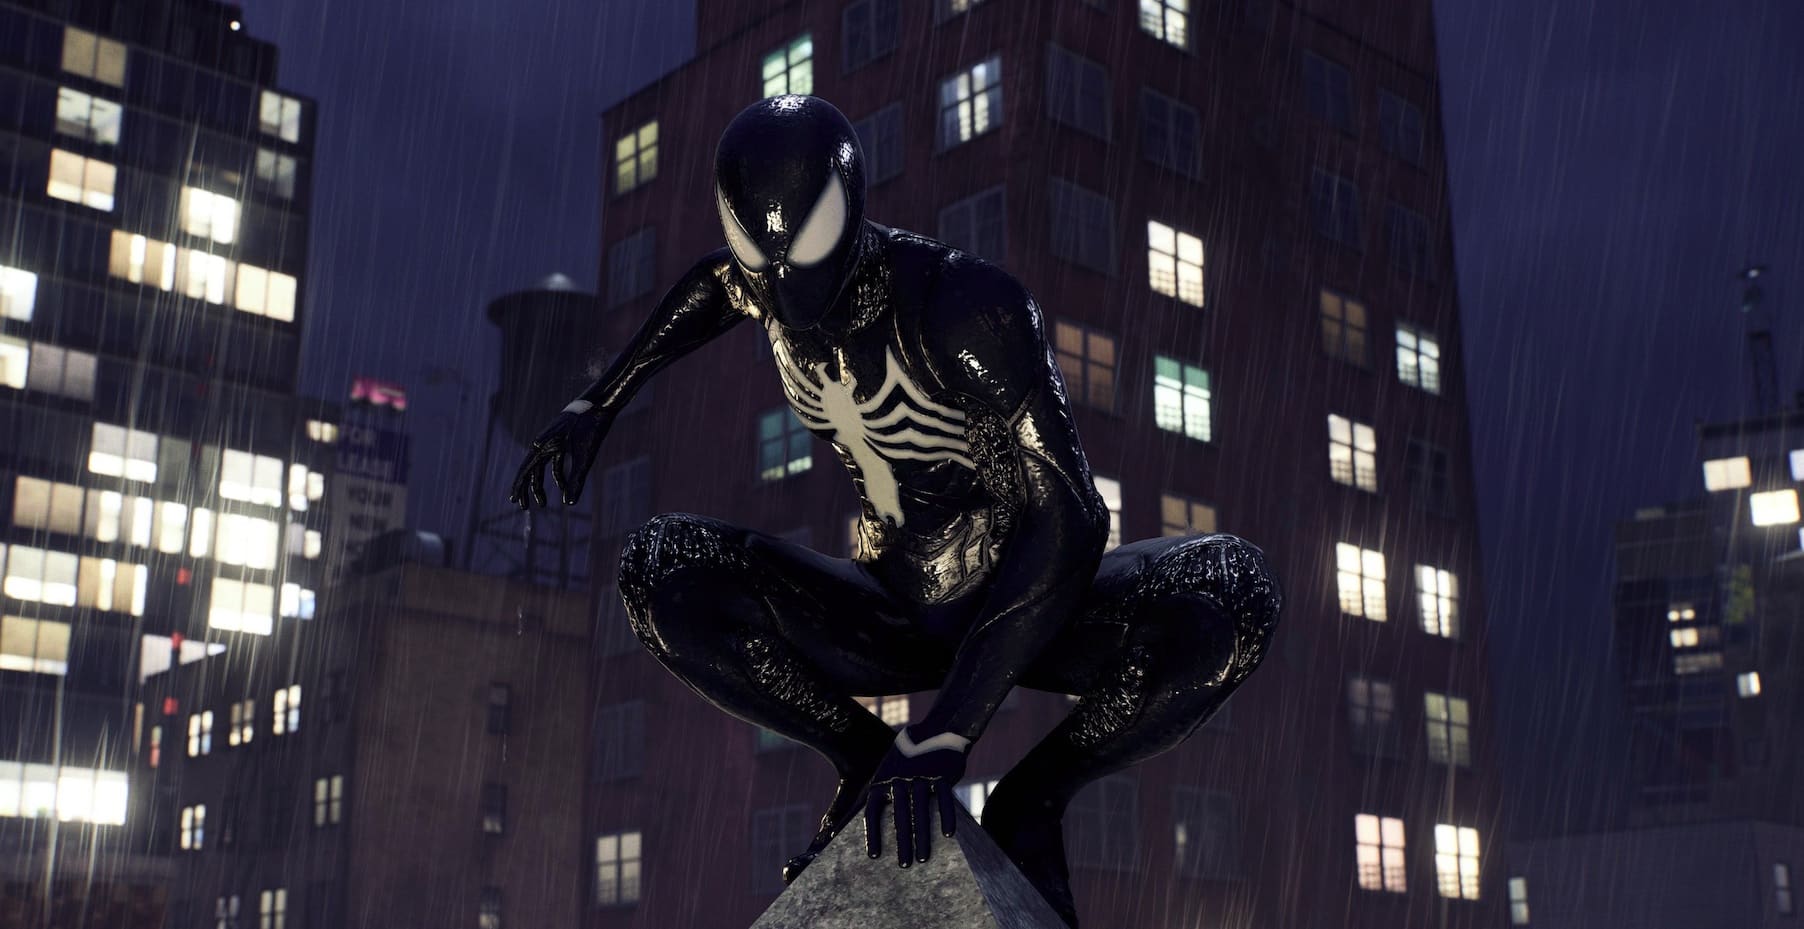 Spider-Man 2 story will go “darker” with Peter's biggest challenge yet